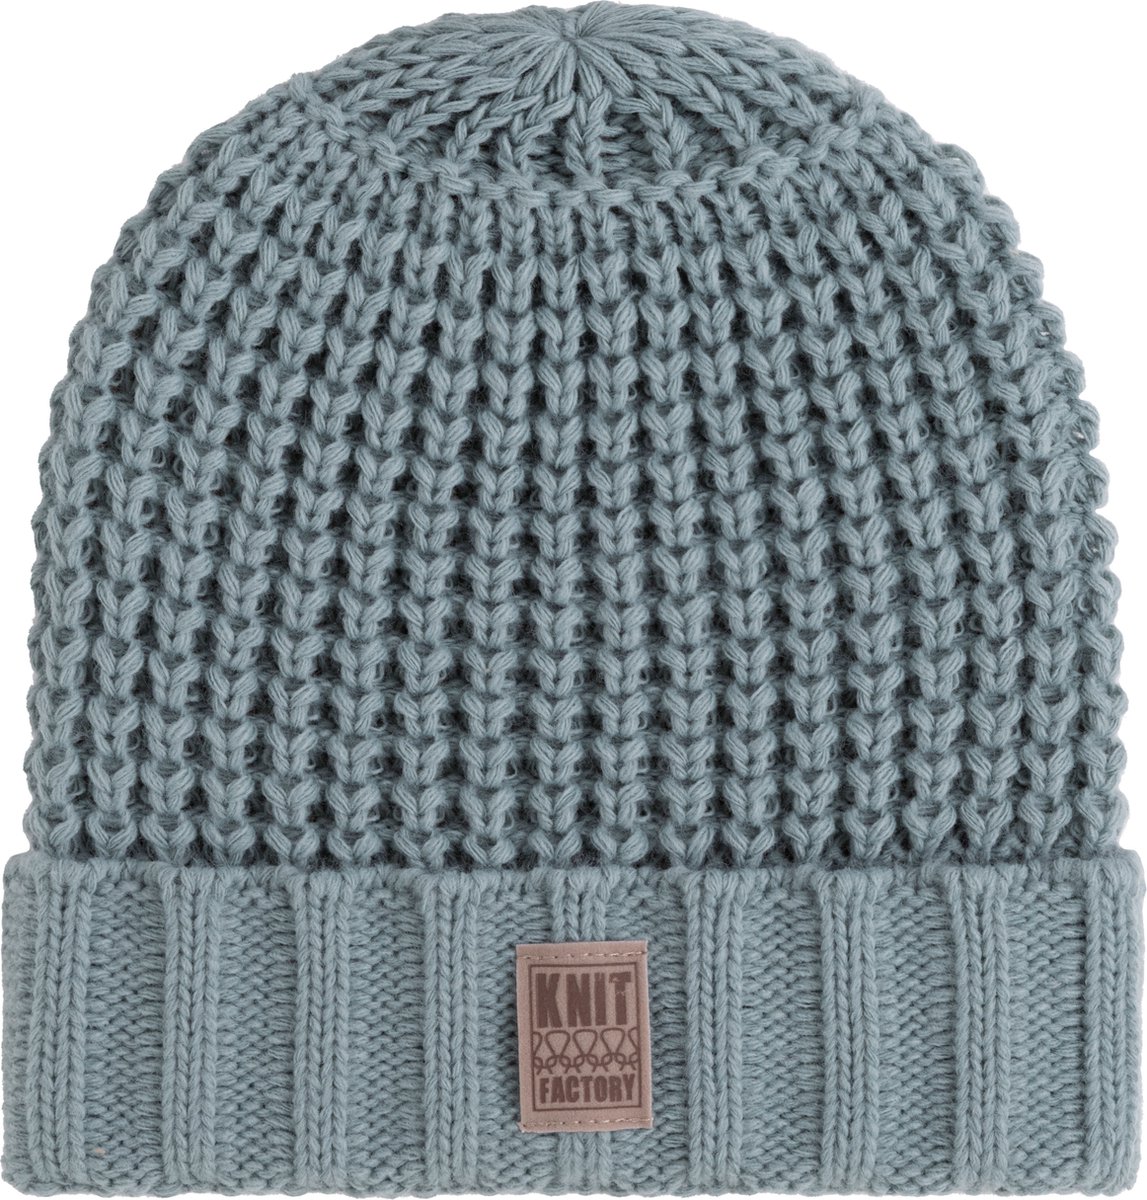 Knit Factory Robin Gebreide Muts Heren & Dames - Beanie hat - Stone Green - Grofgebreid - Warme groene Wintermuts - Unisex - One Size